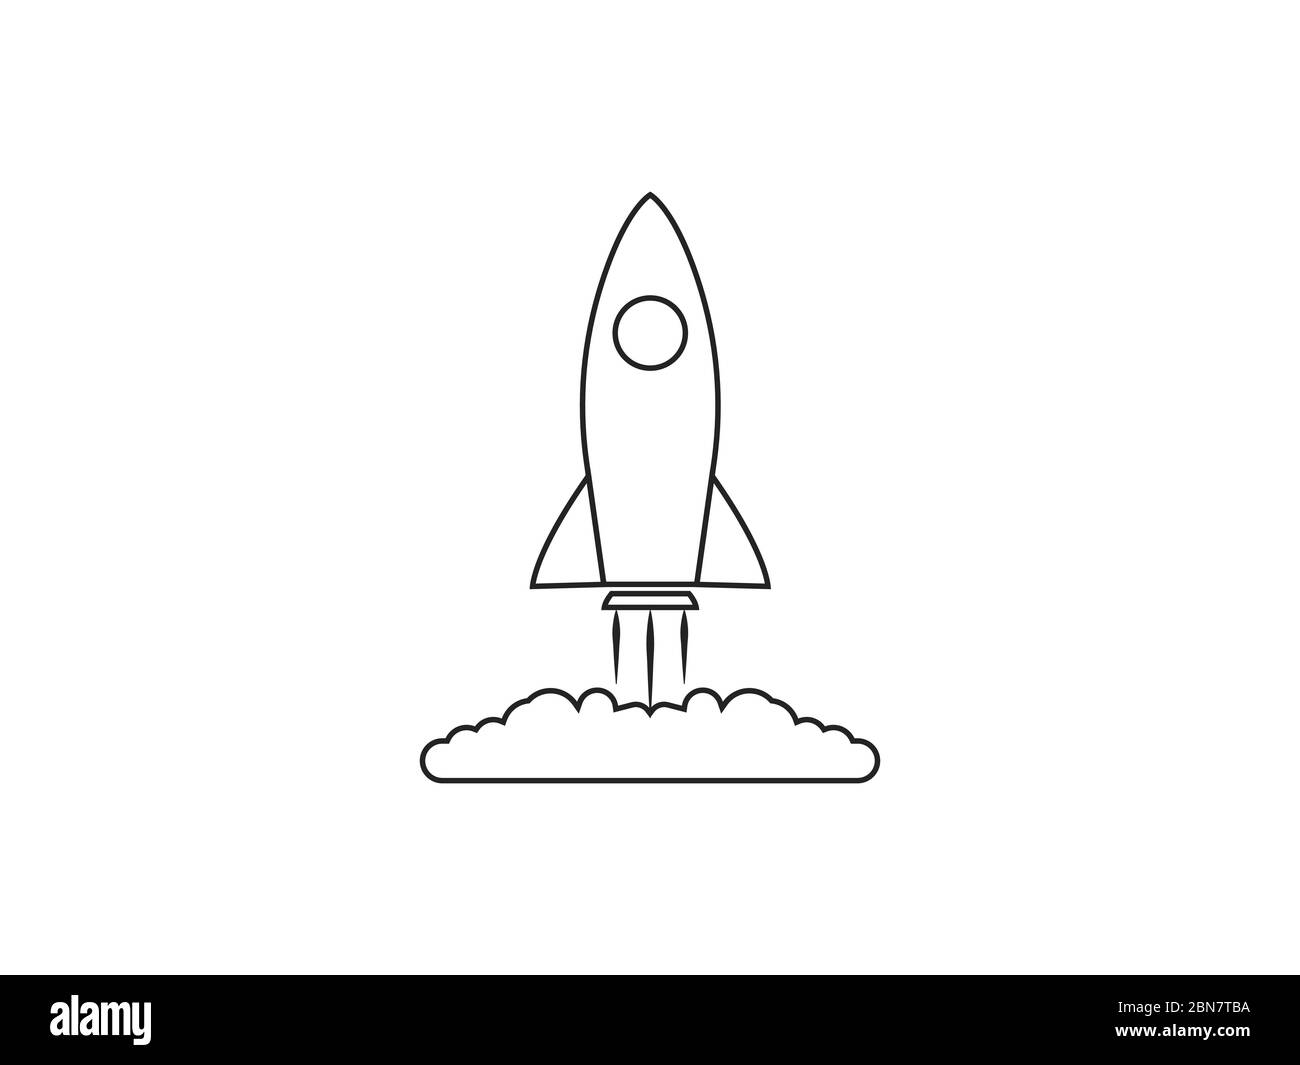 Start-, Rakete-, Start-Symbol. Vektorgrafik, flaches Design. Stock Vektor